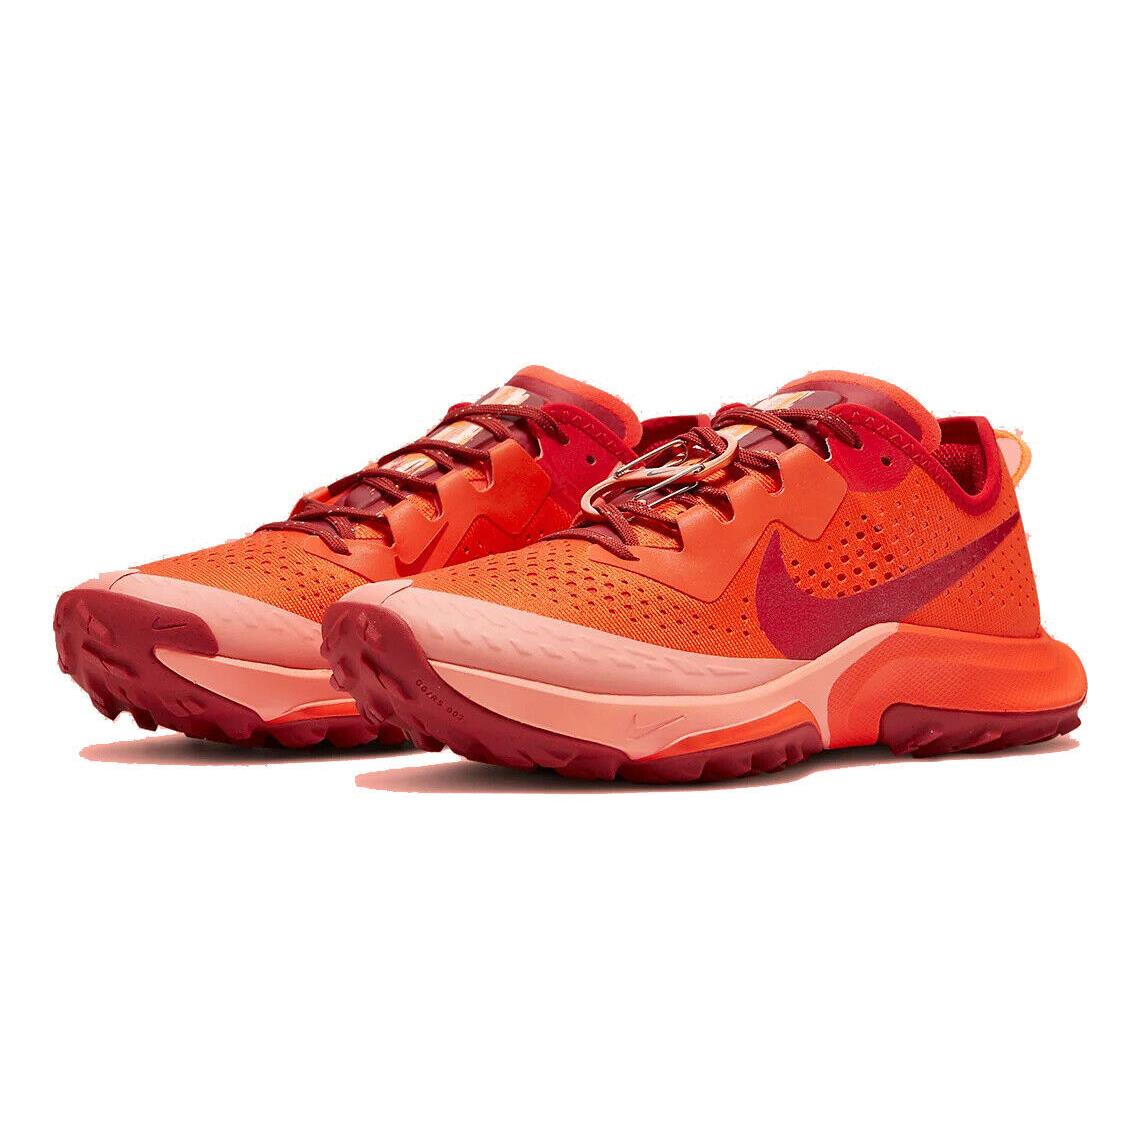 Nike Air Zoom Terra Kiger 7 Womens Size 7 Sneaker Shoes DM9469 800 Orange - Orange